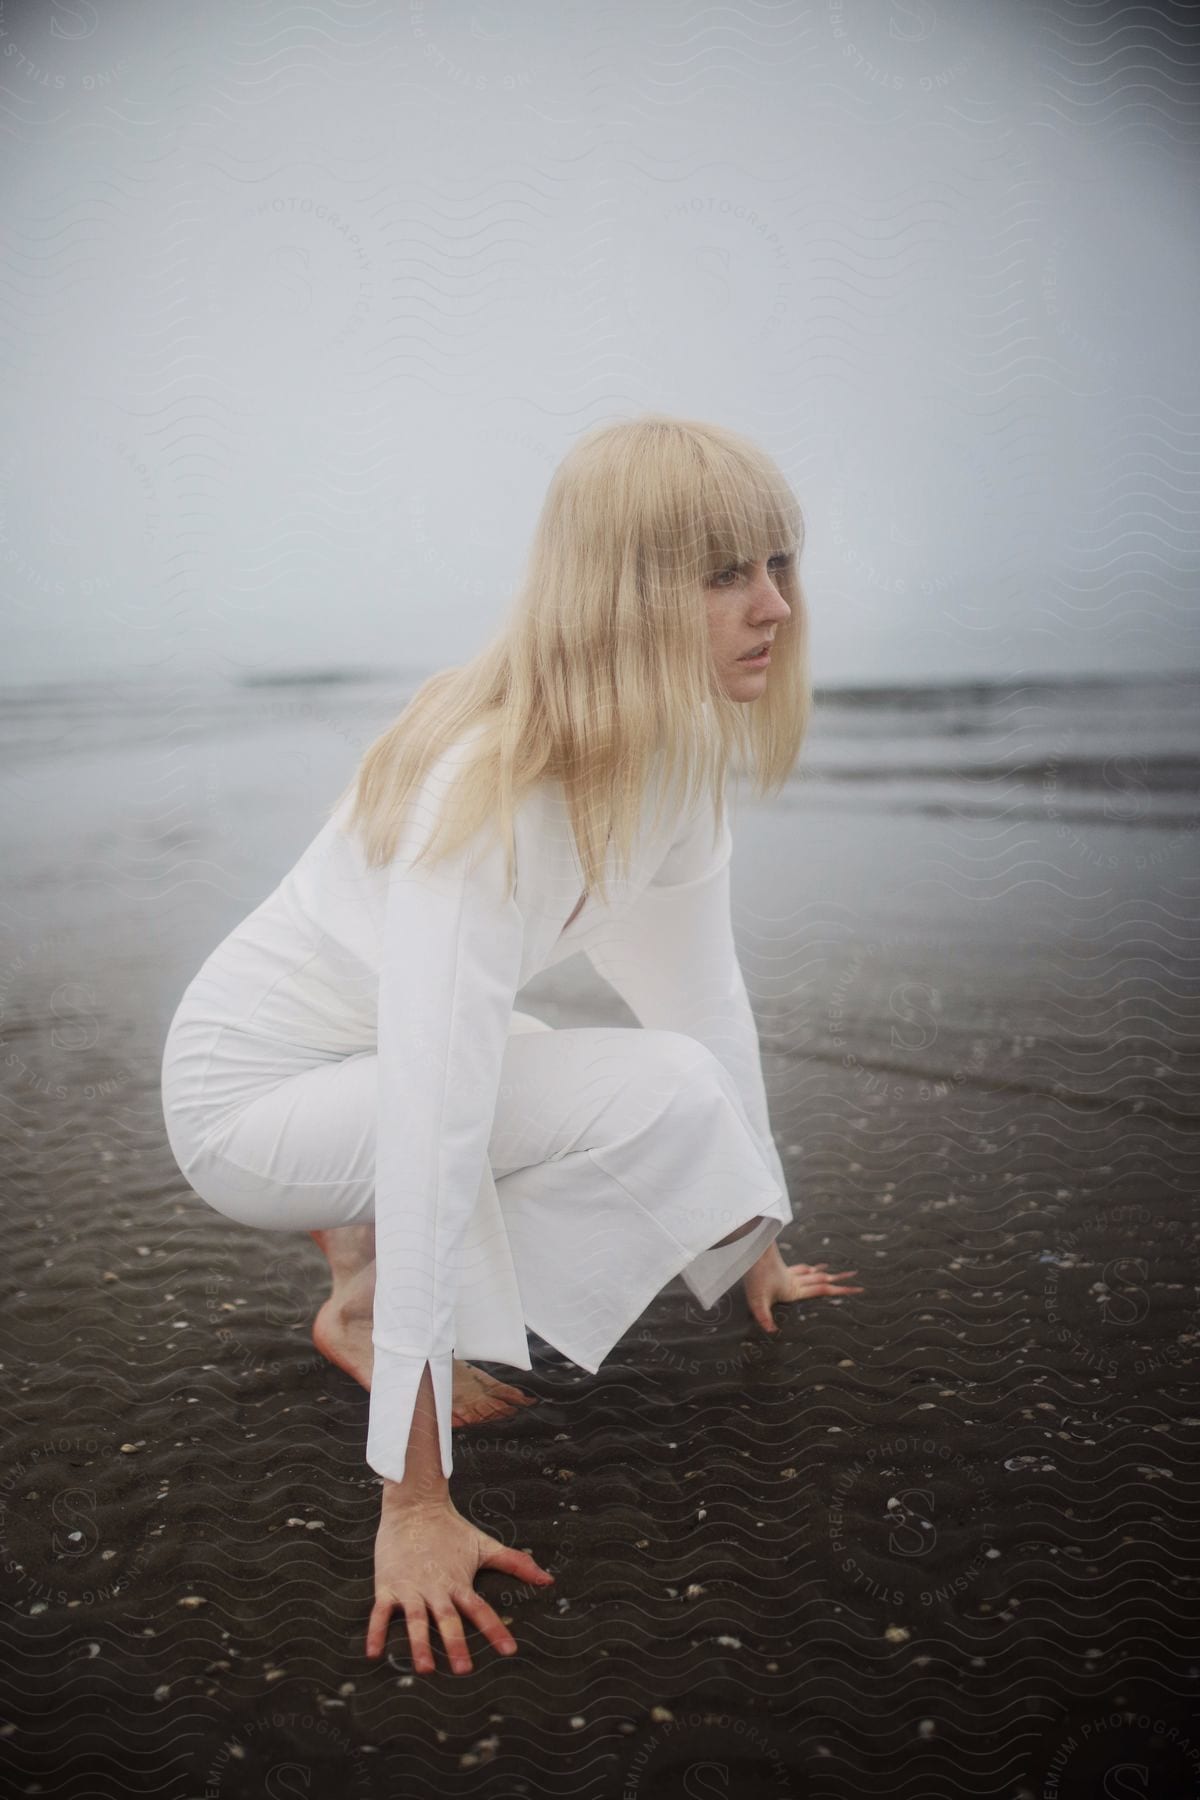 A woman in a white dress crouching on a cloudy beach